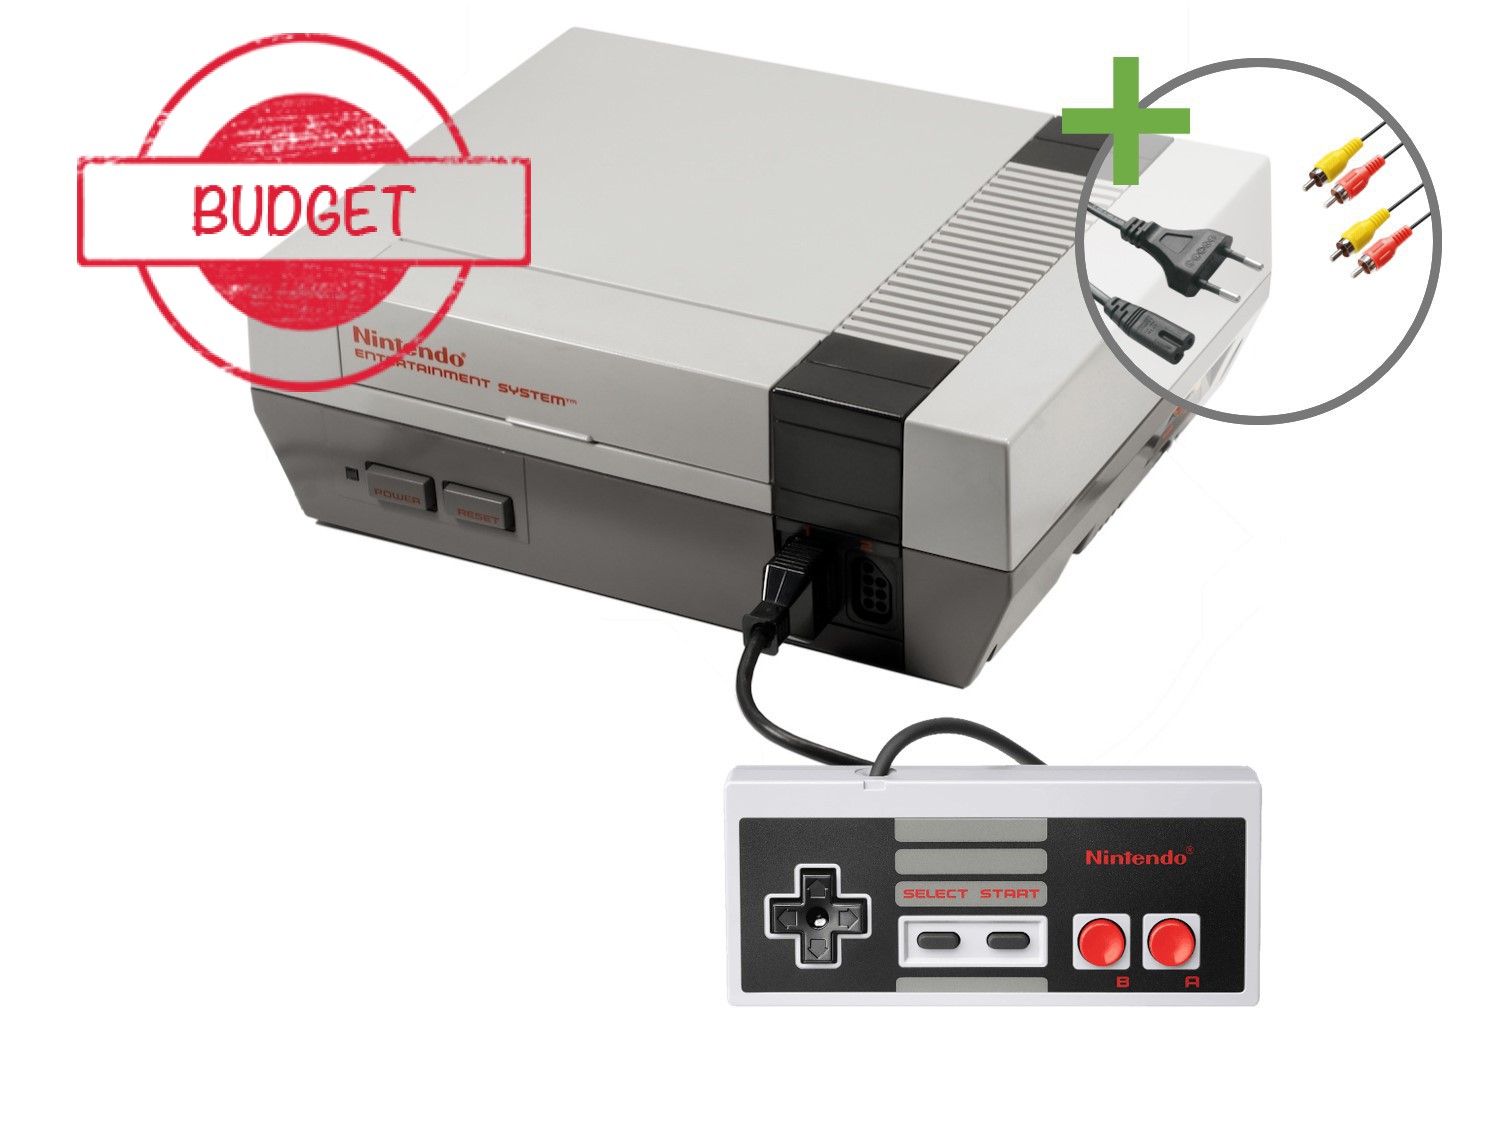 Nintendo NES Starter Pack - Control Deck Edition - Budget Kopen | Nintendo NES Hardware